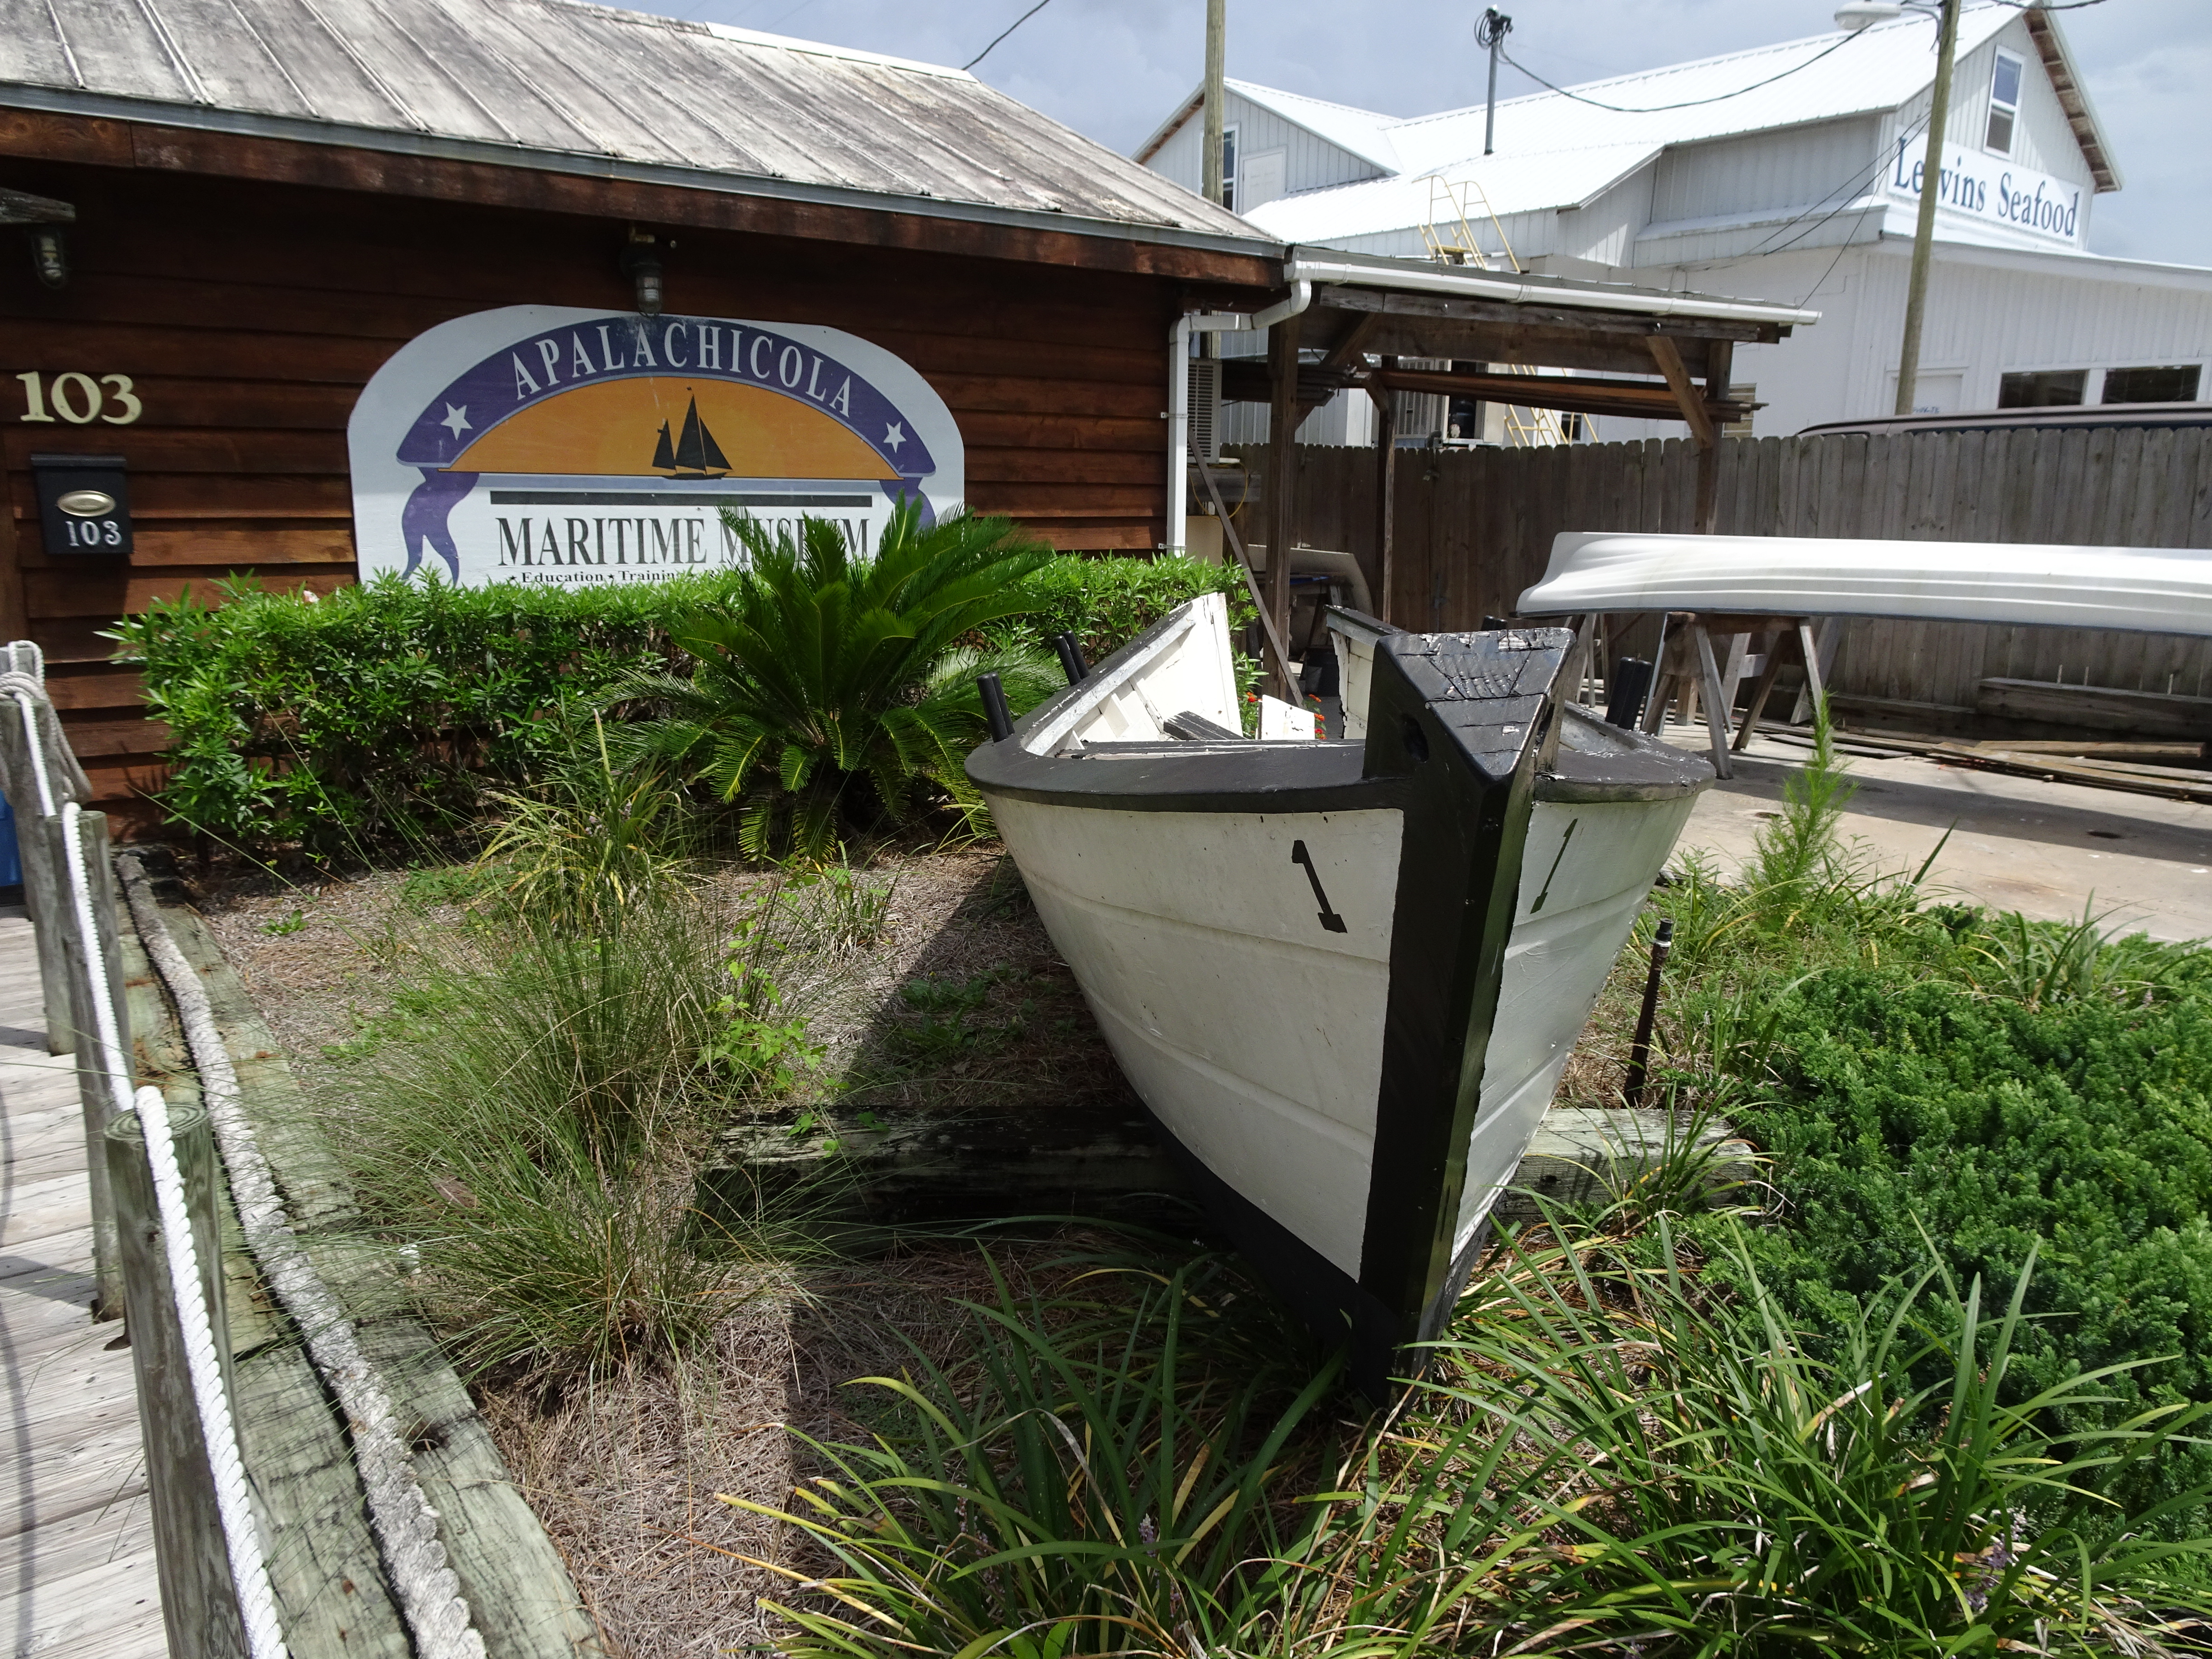 Figure 4. Apalachicola Maritime Museum.